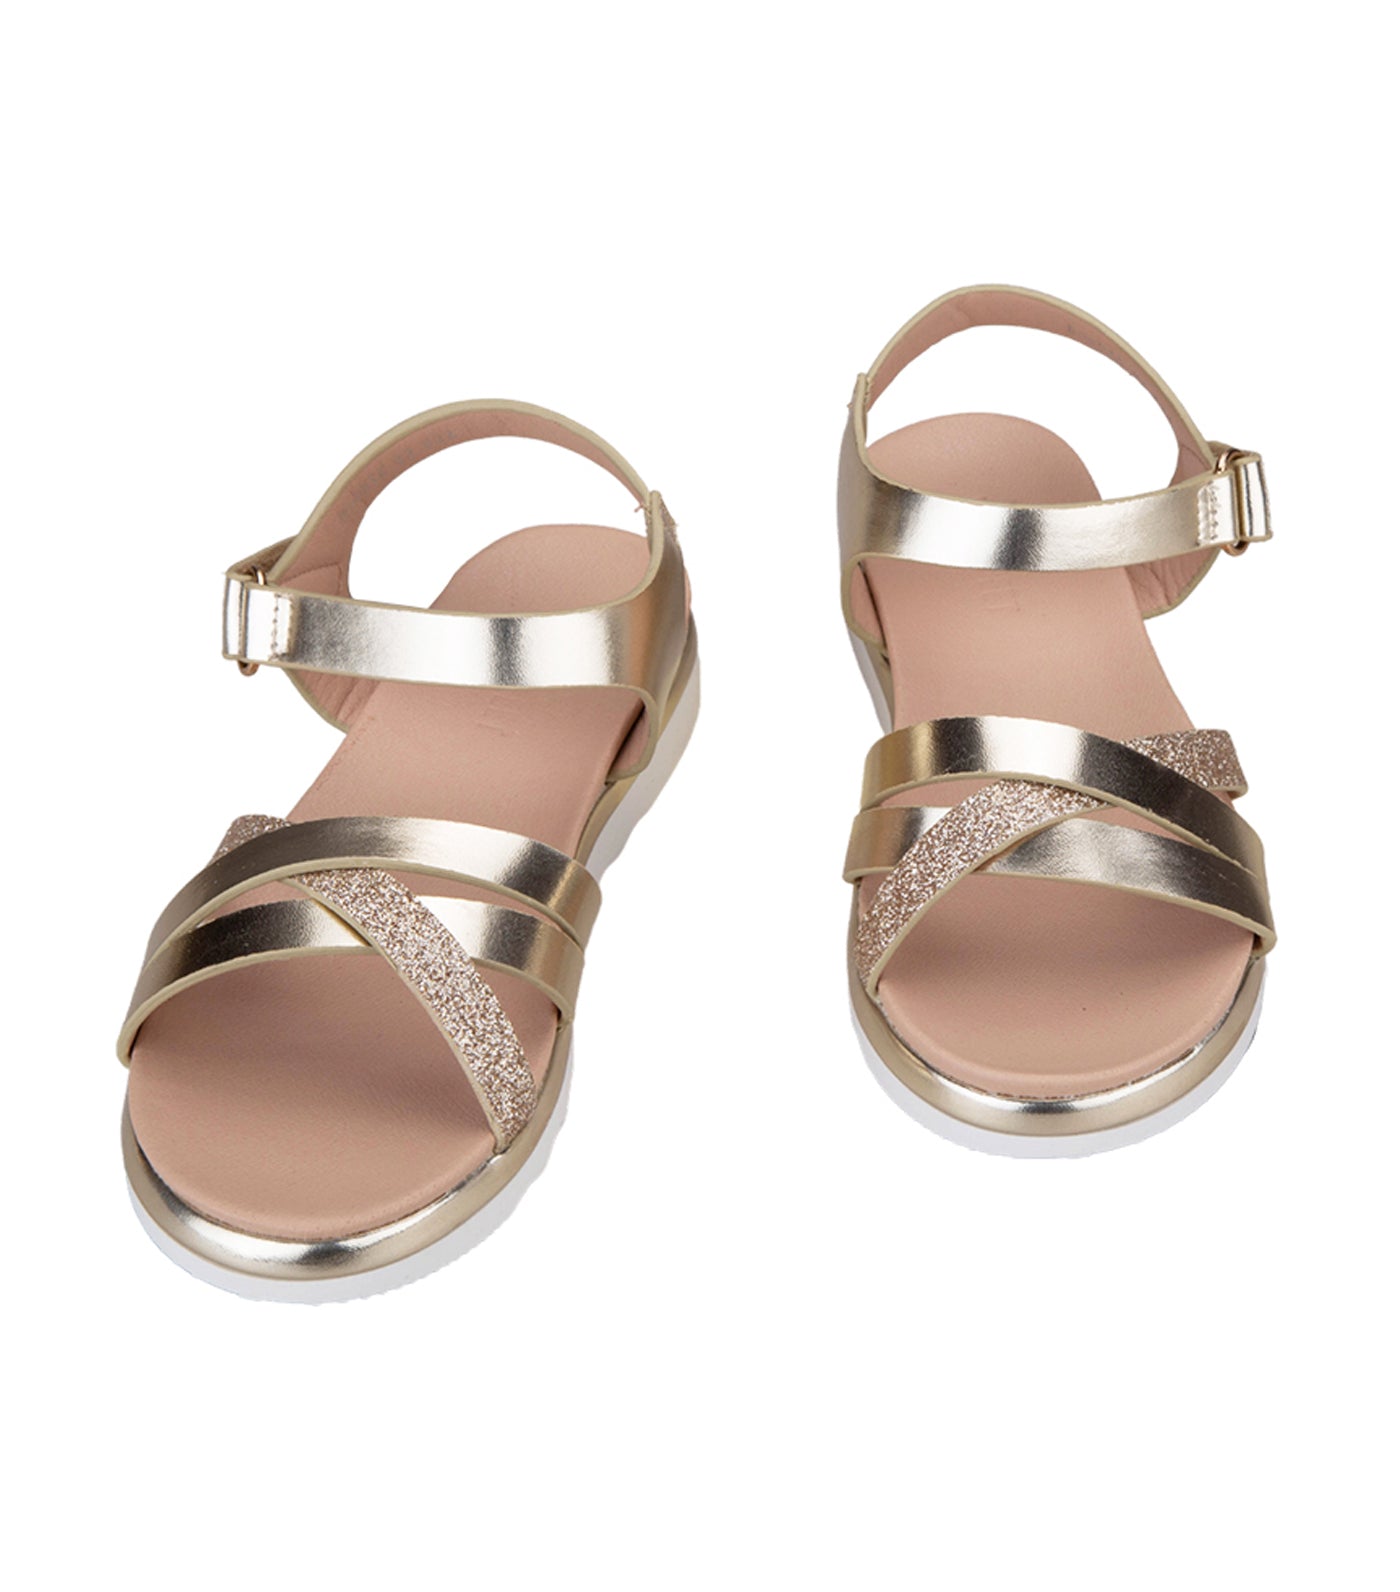 Bobbie Kids Sandals for Girls - Gold